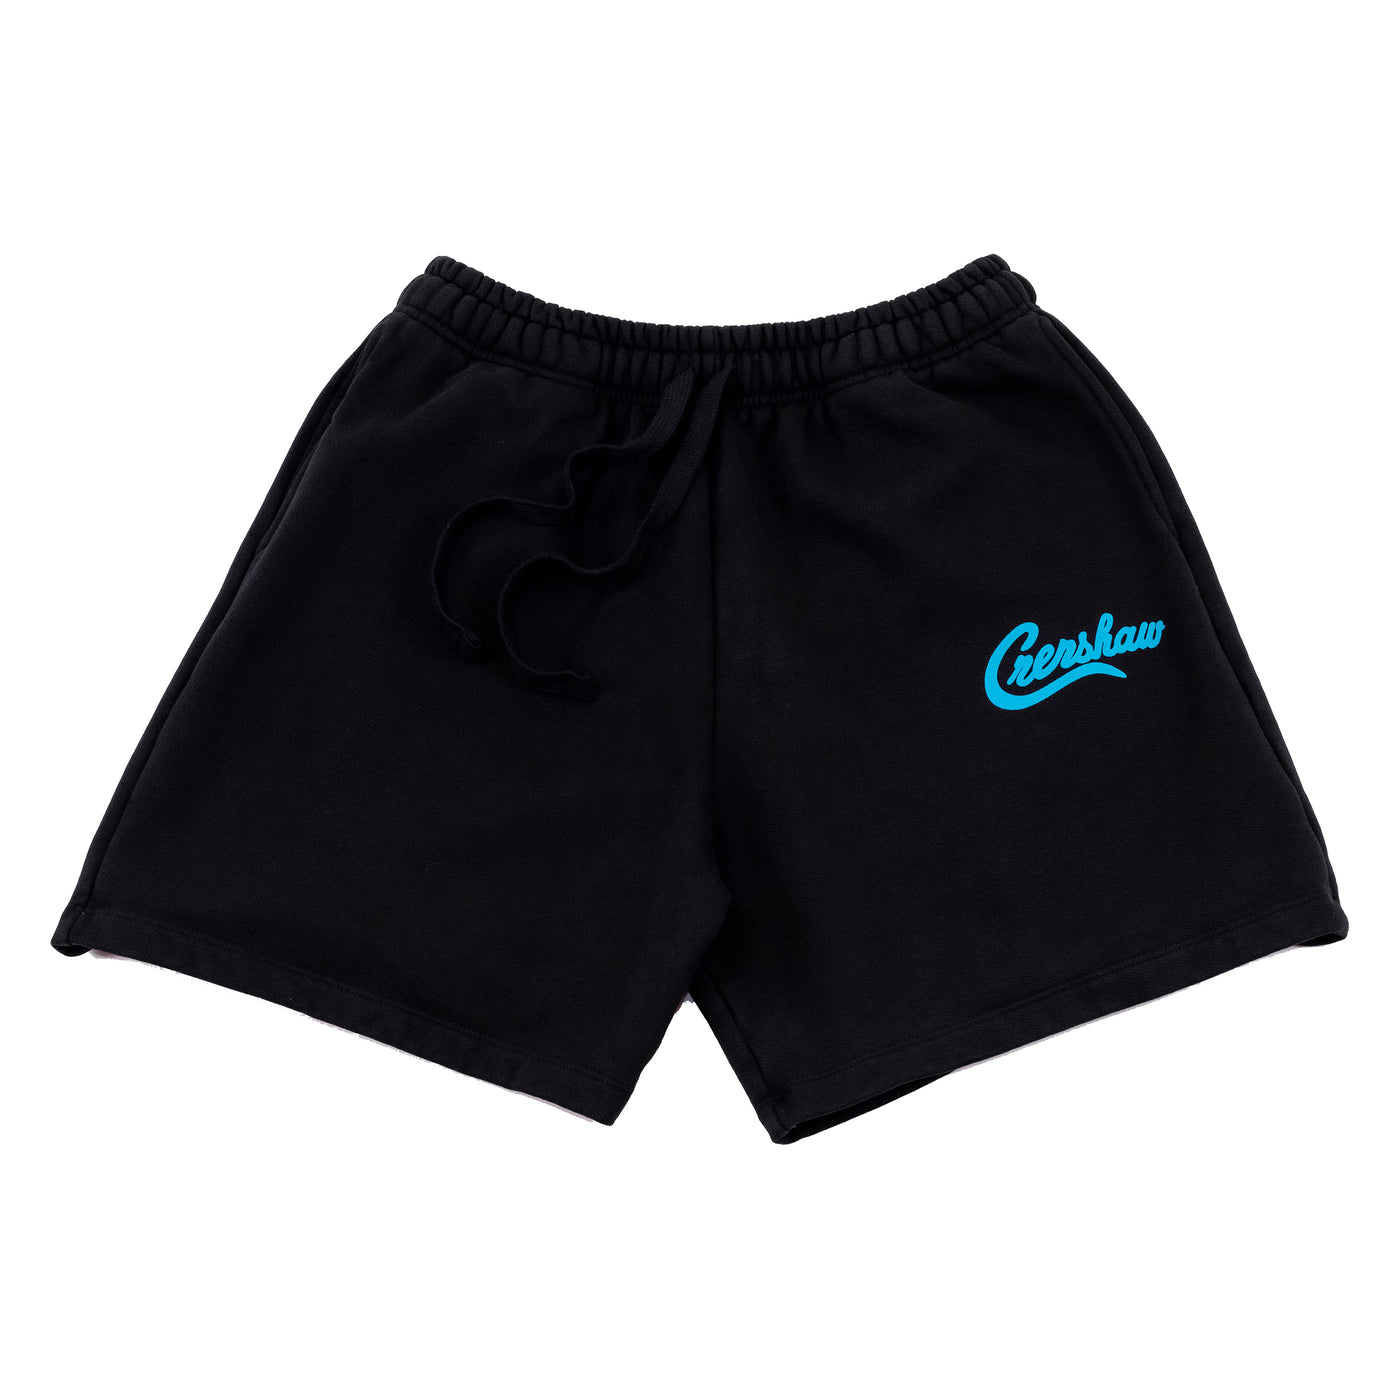 Crenshaw Classic LA Shorts - Black/Teal